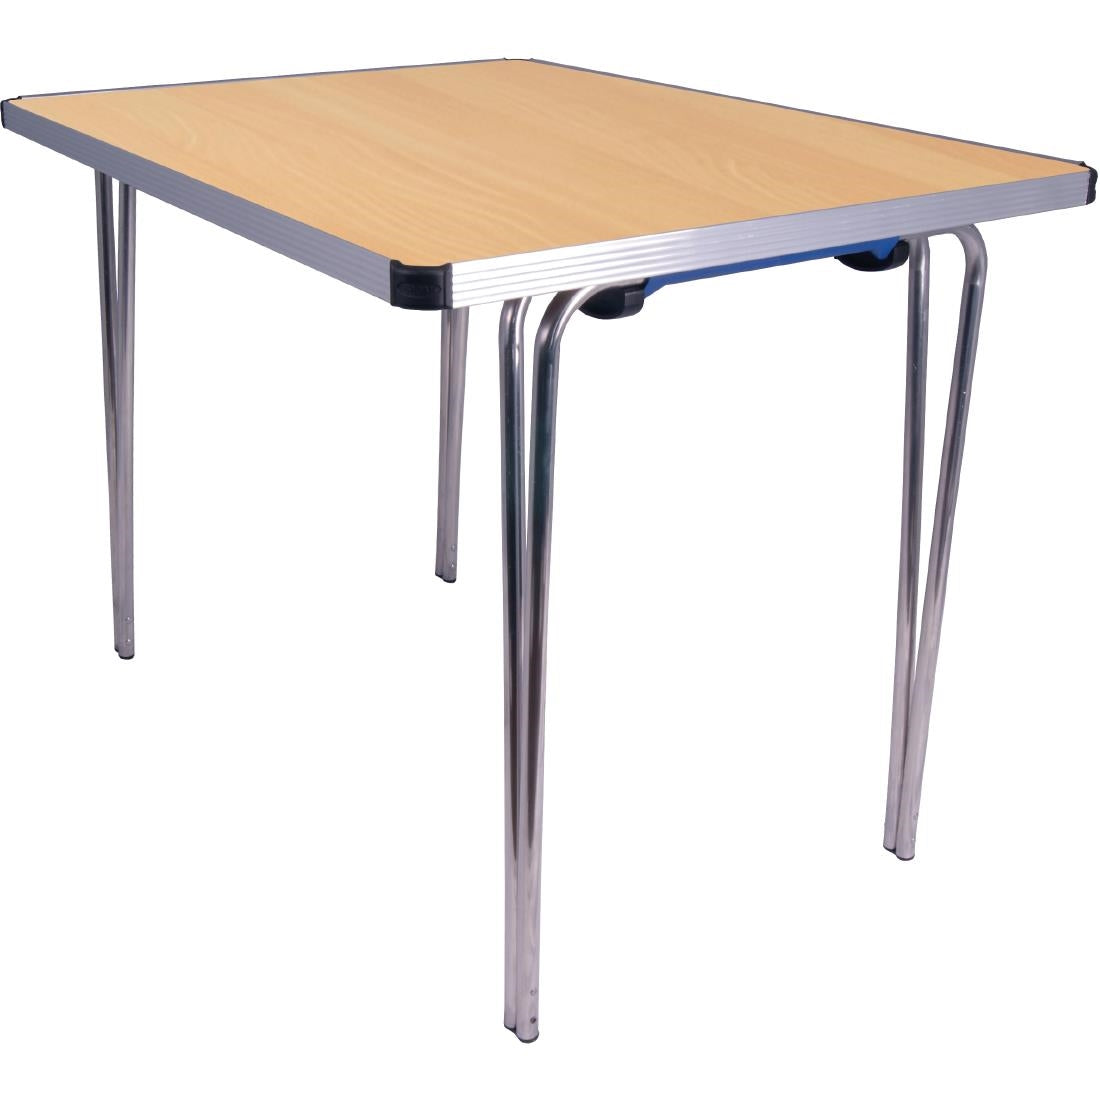 DM603 Gopak Contour Folding Table Beech 3ft JD Catering Equipment Solutions Ltd